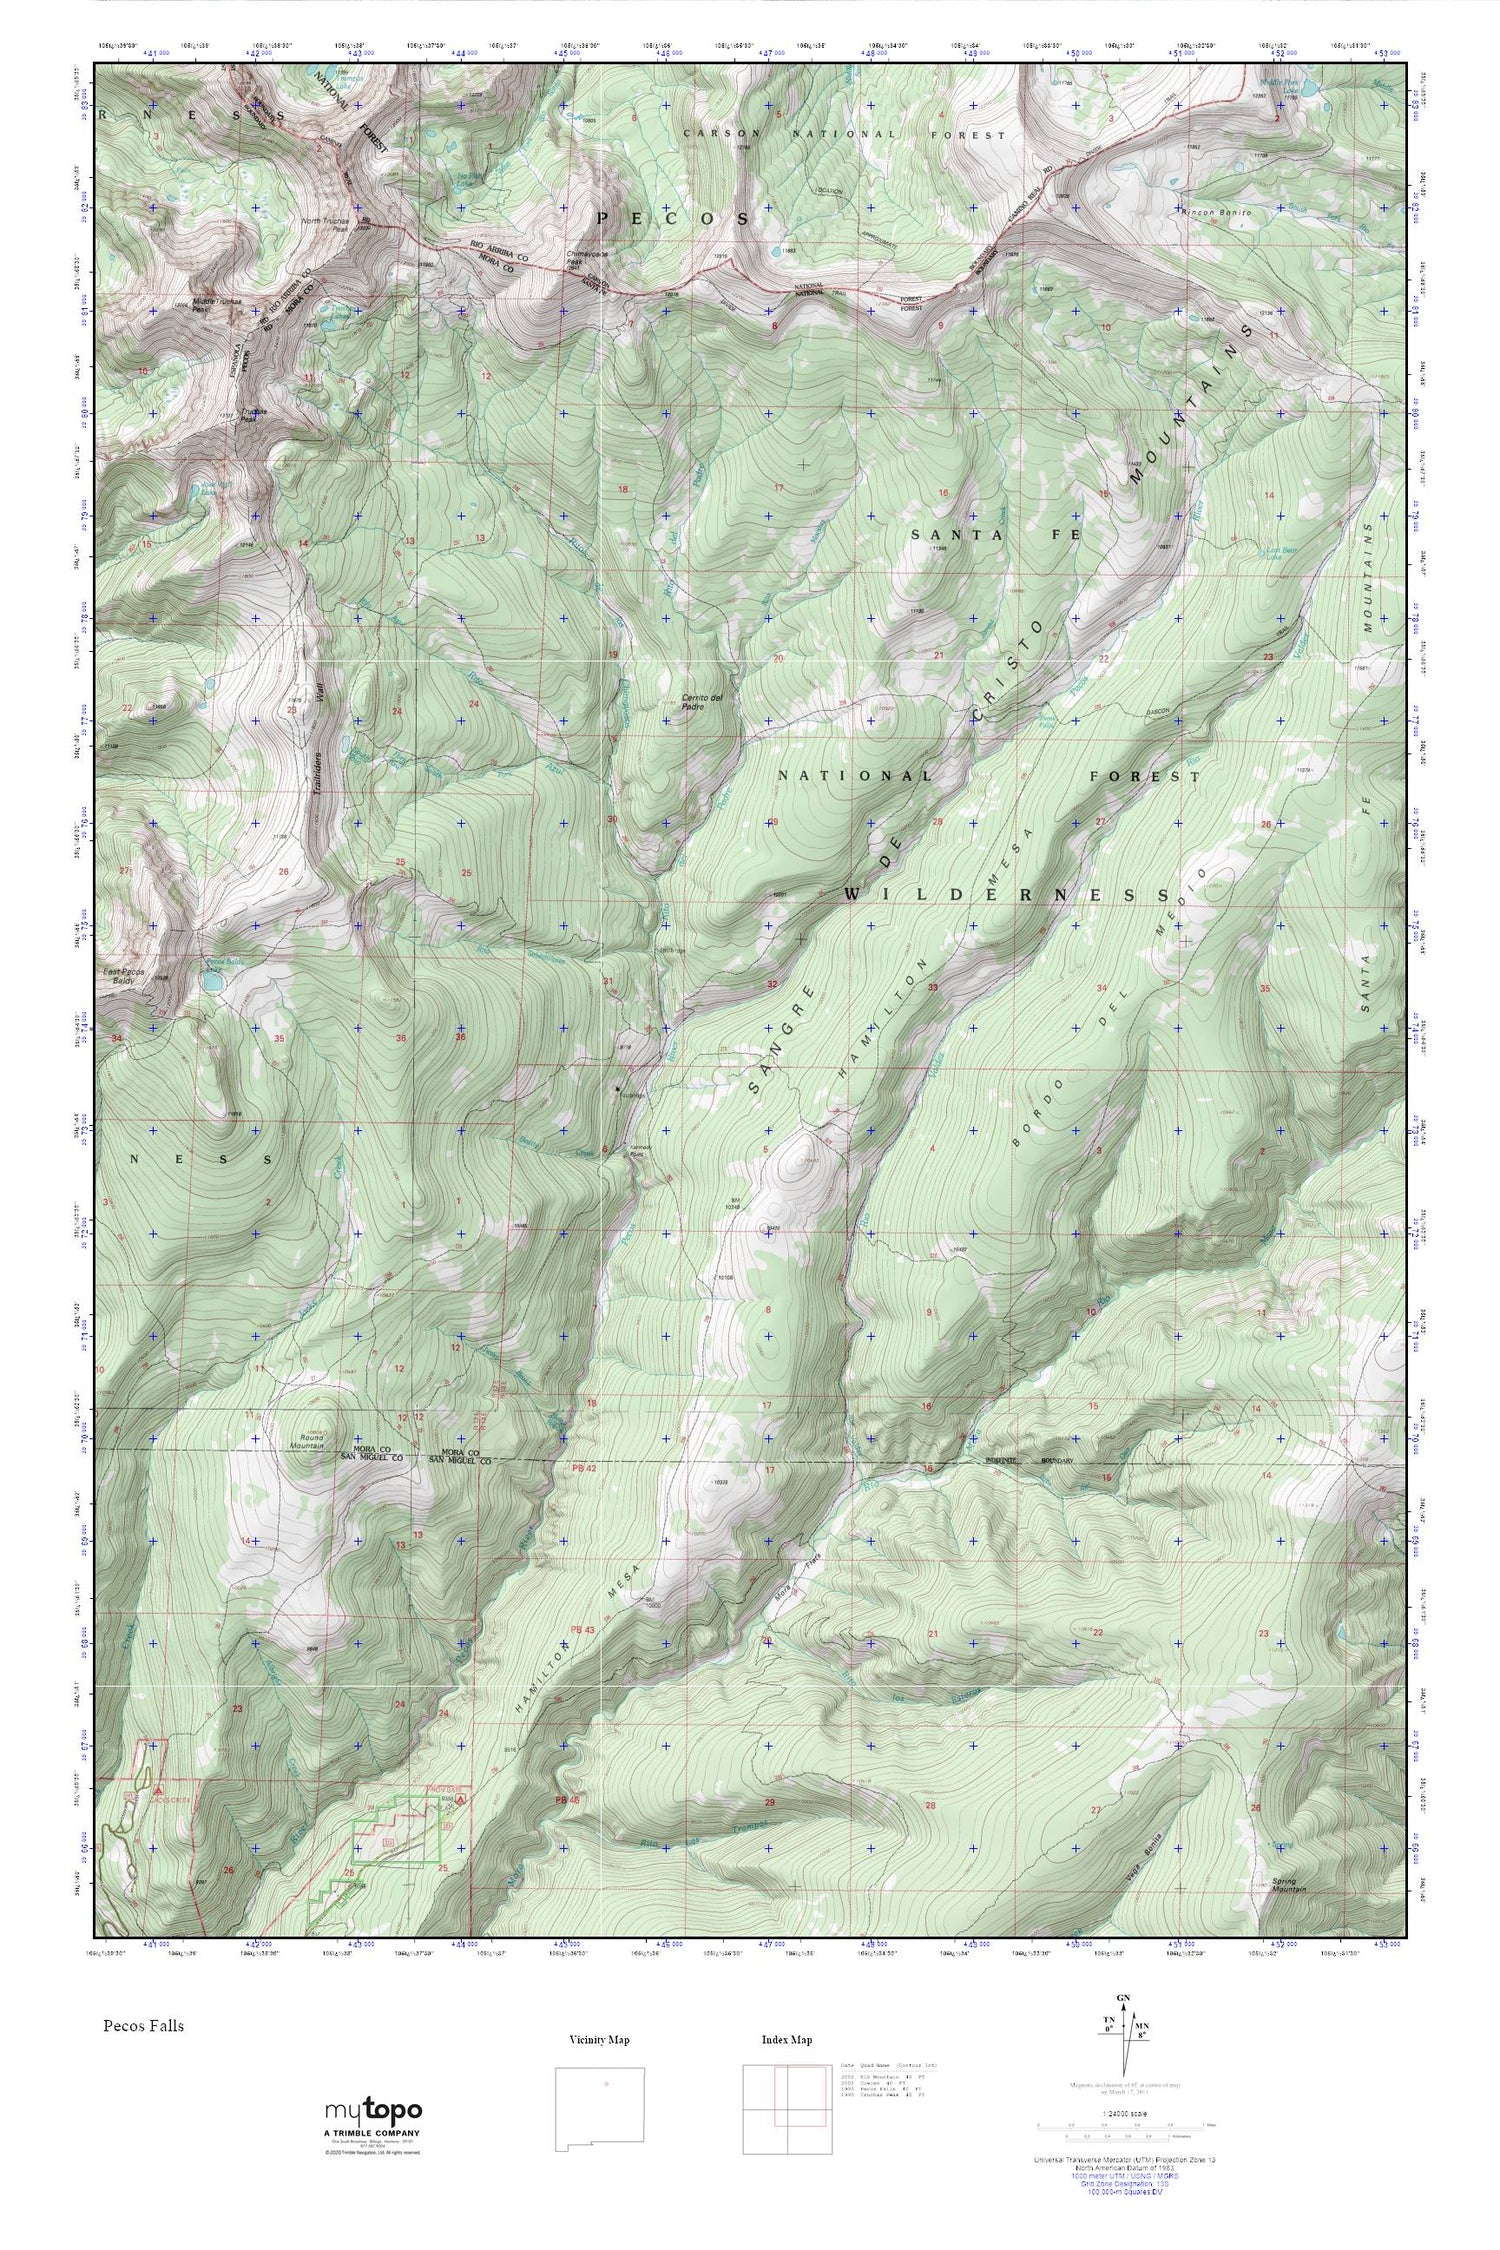 Pecos Falls MyTopo Explorer Series Map Image